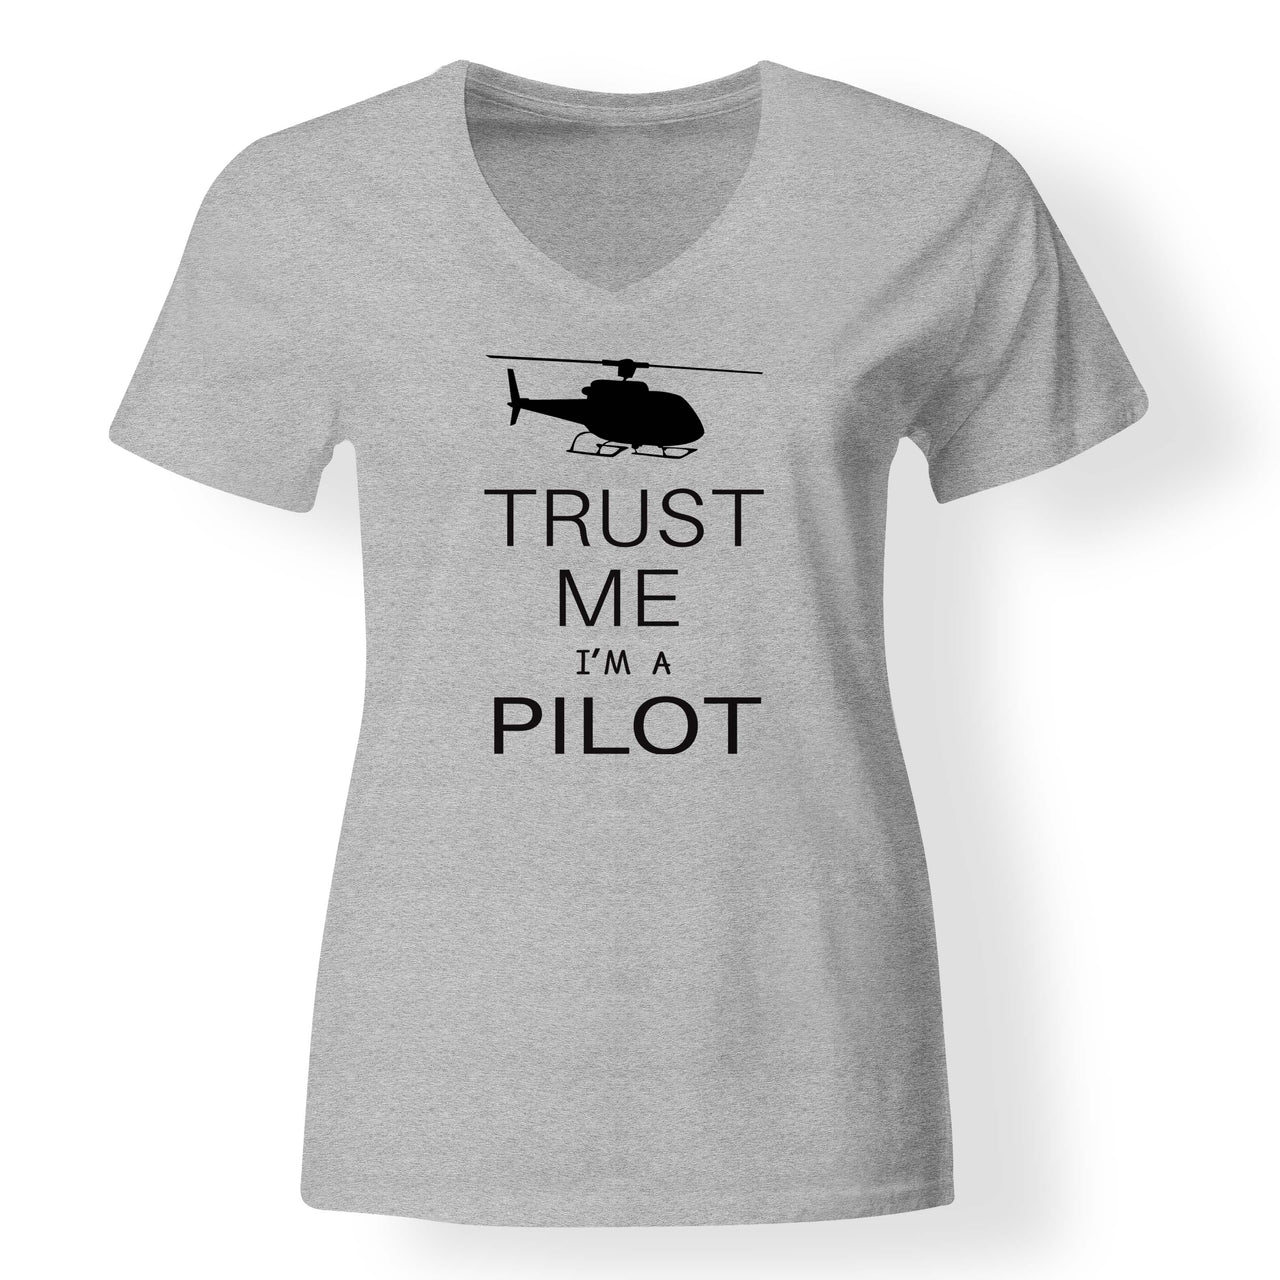 Trust Me I'm a Pilot (Helicopter) Designed V-Neck T-Shirts